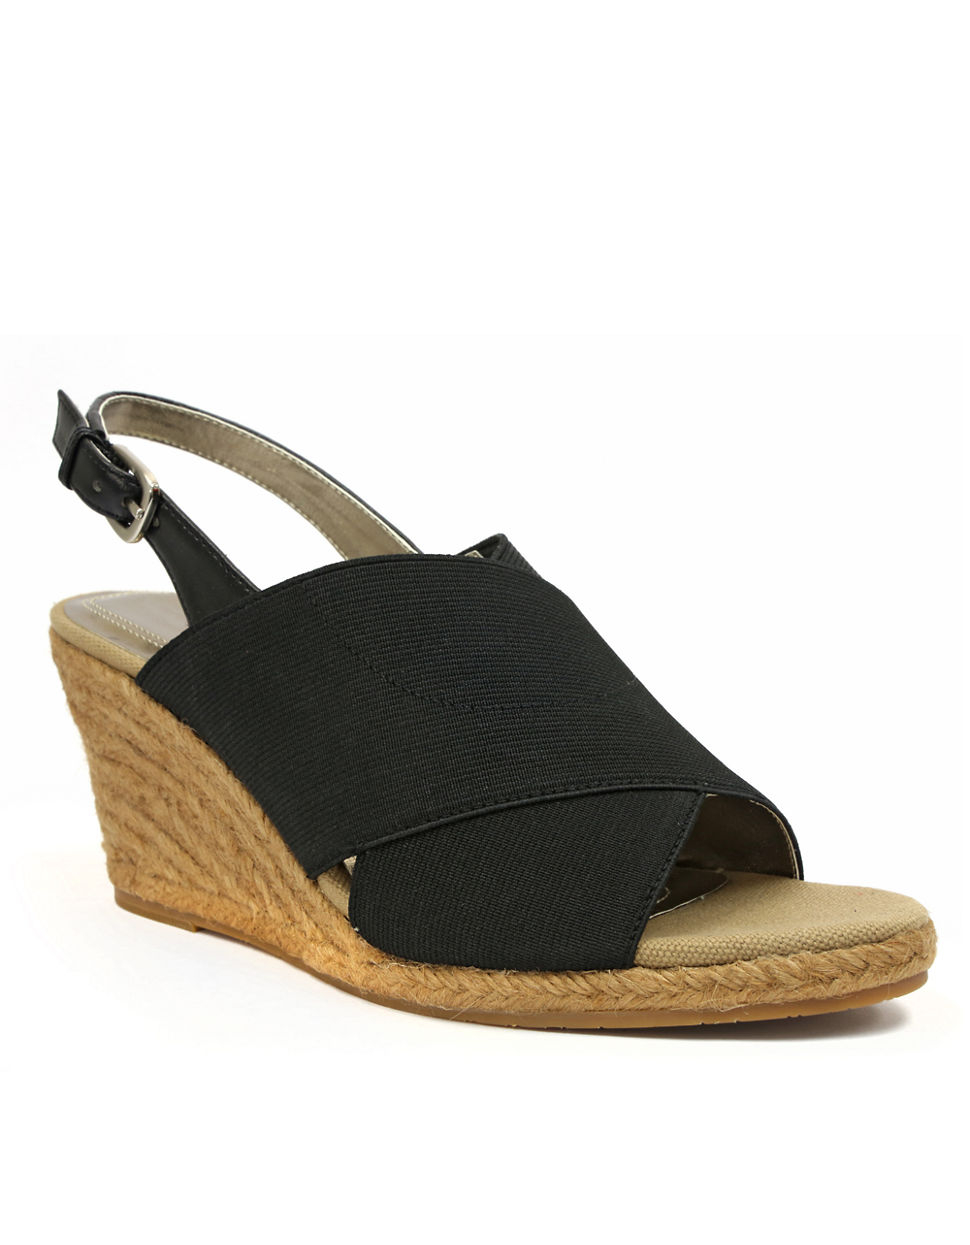 Tahari Wanda Wedge Sandals in Black | Lyst